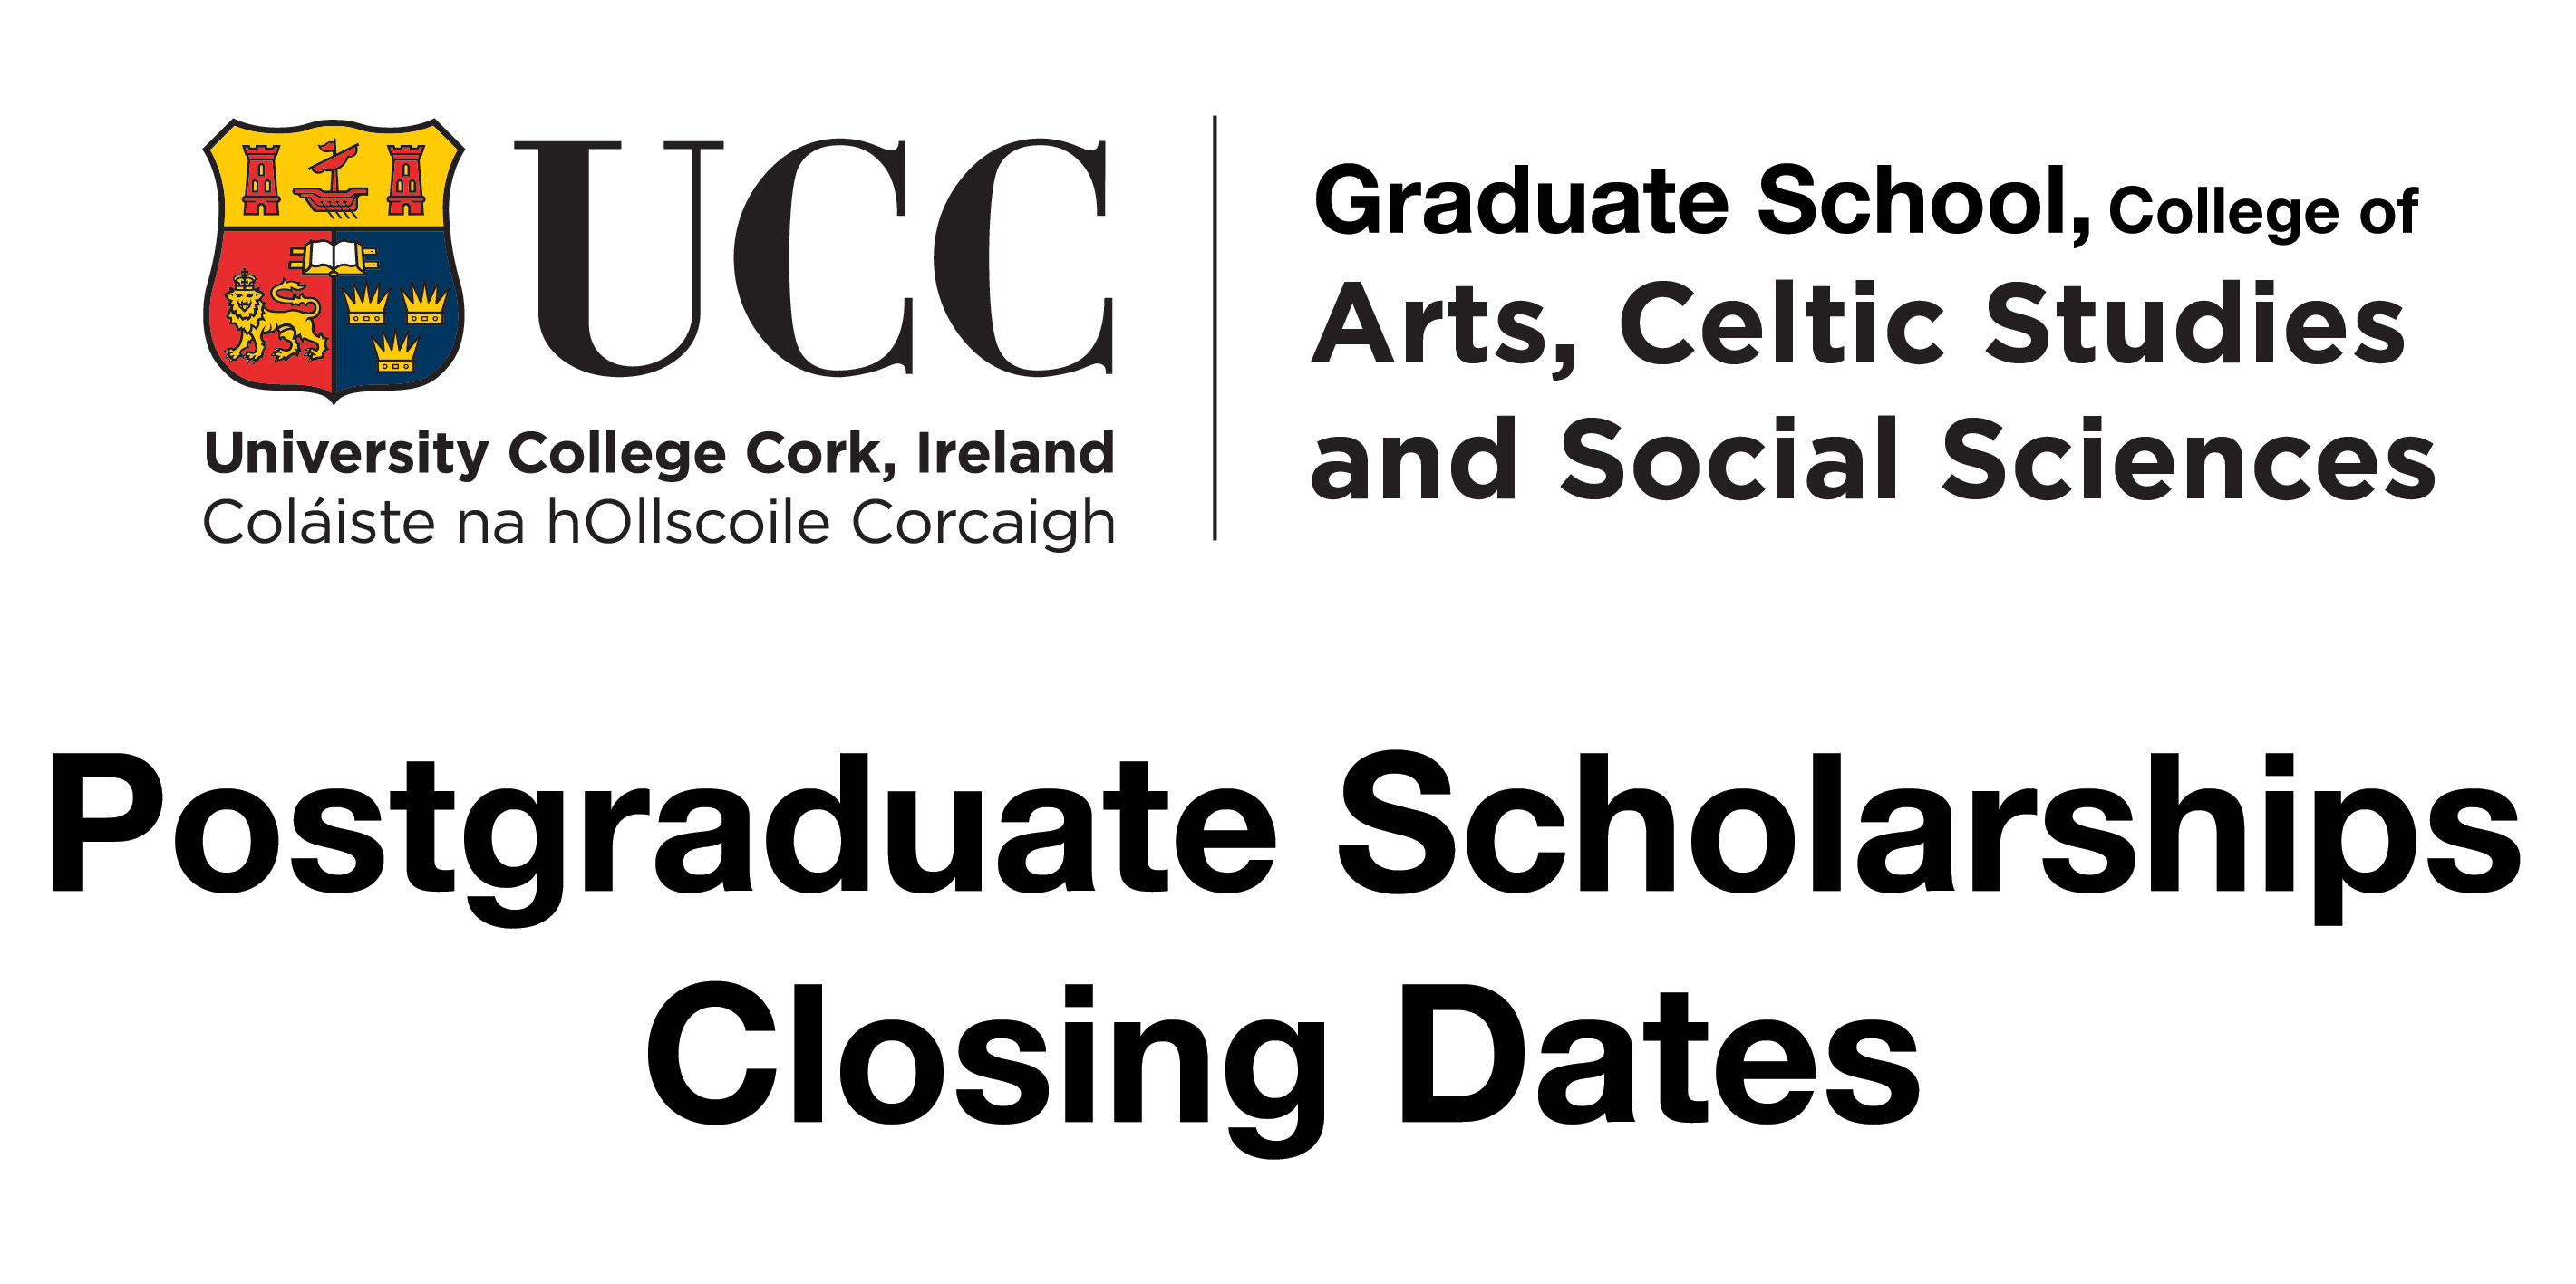 Postgraduate Scholarships closing dates reminder.